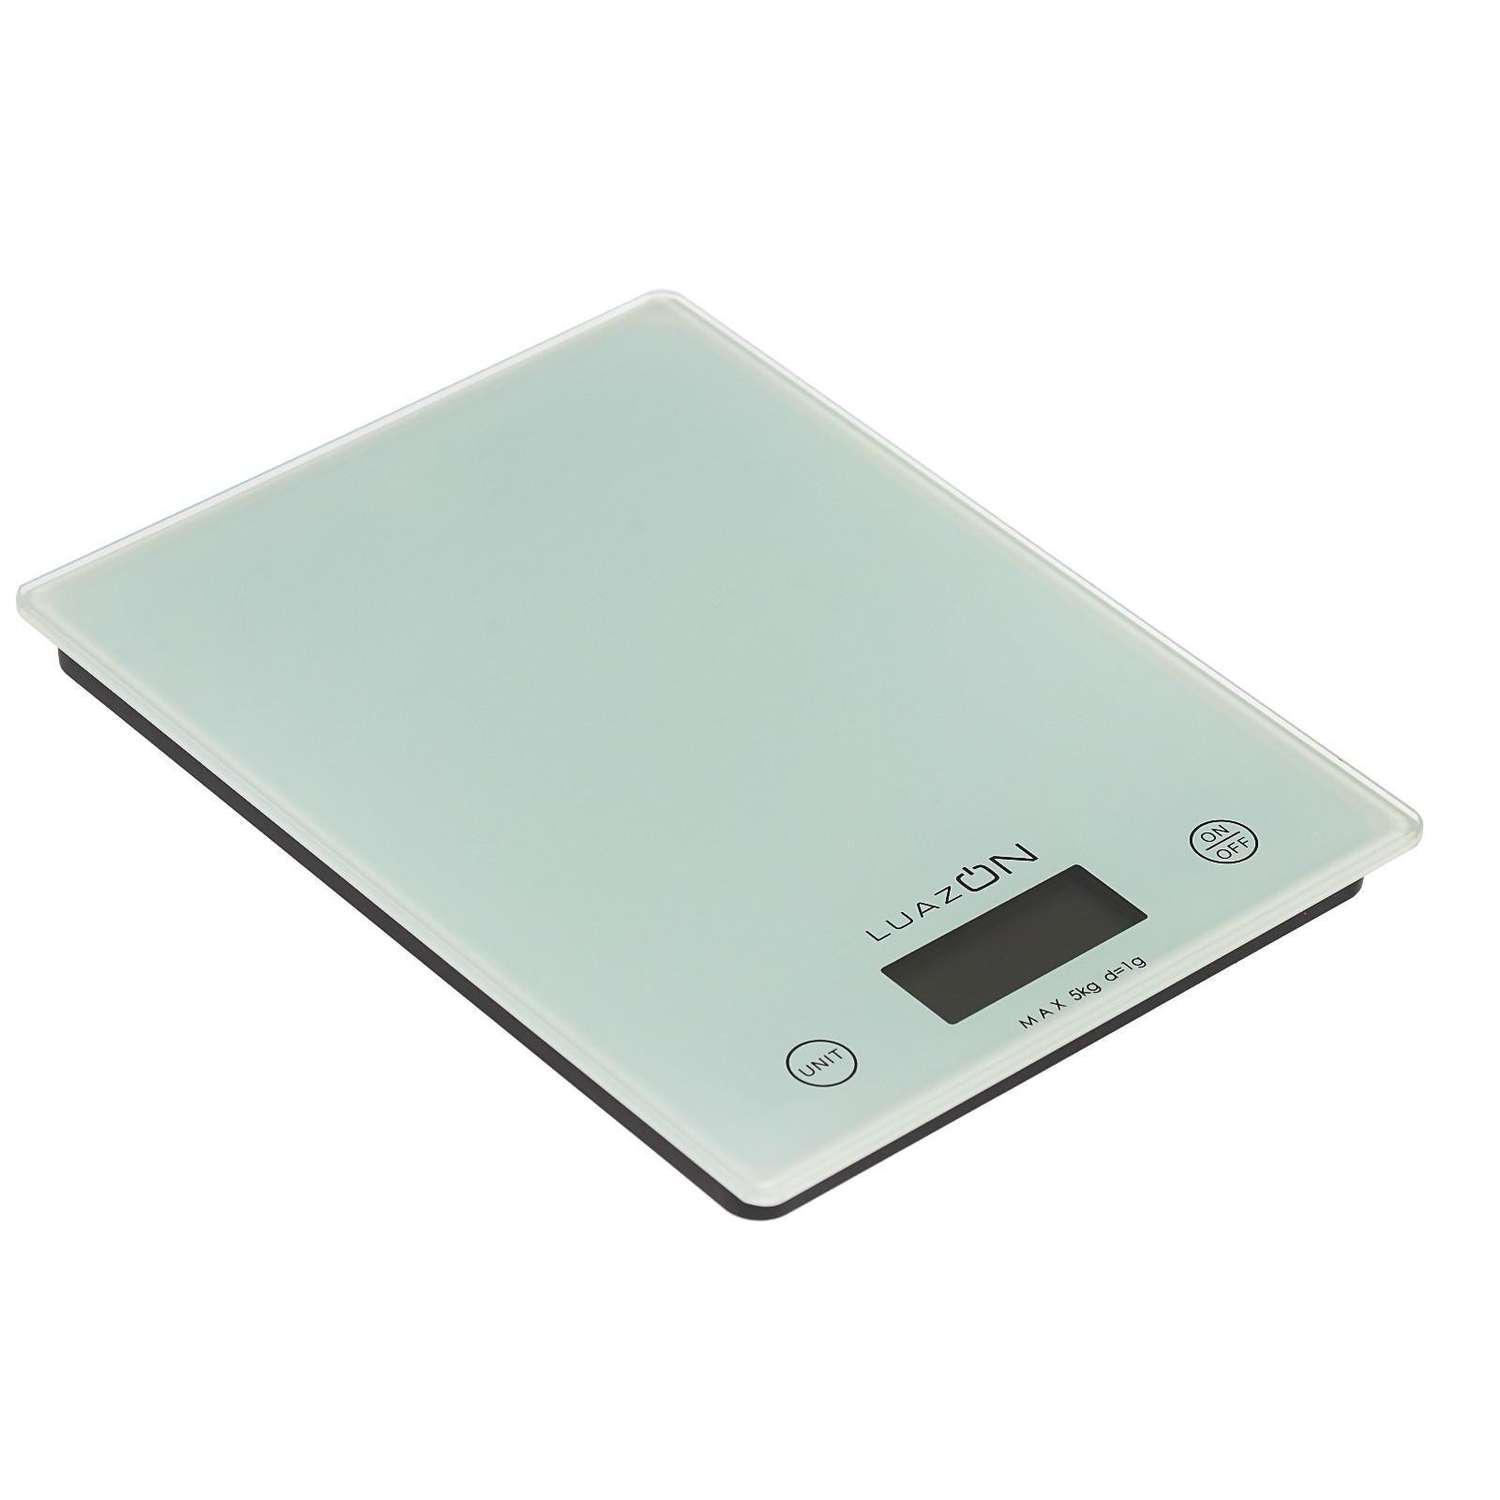 Весы кухонные Luazon Home LVK-702 электронные до 7 кг белые - фото 1